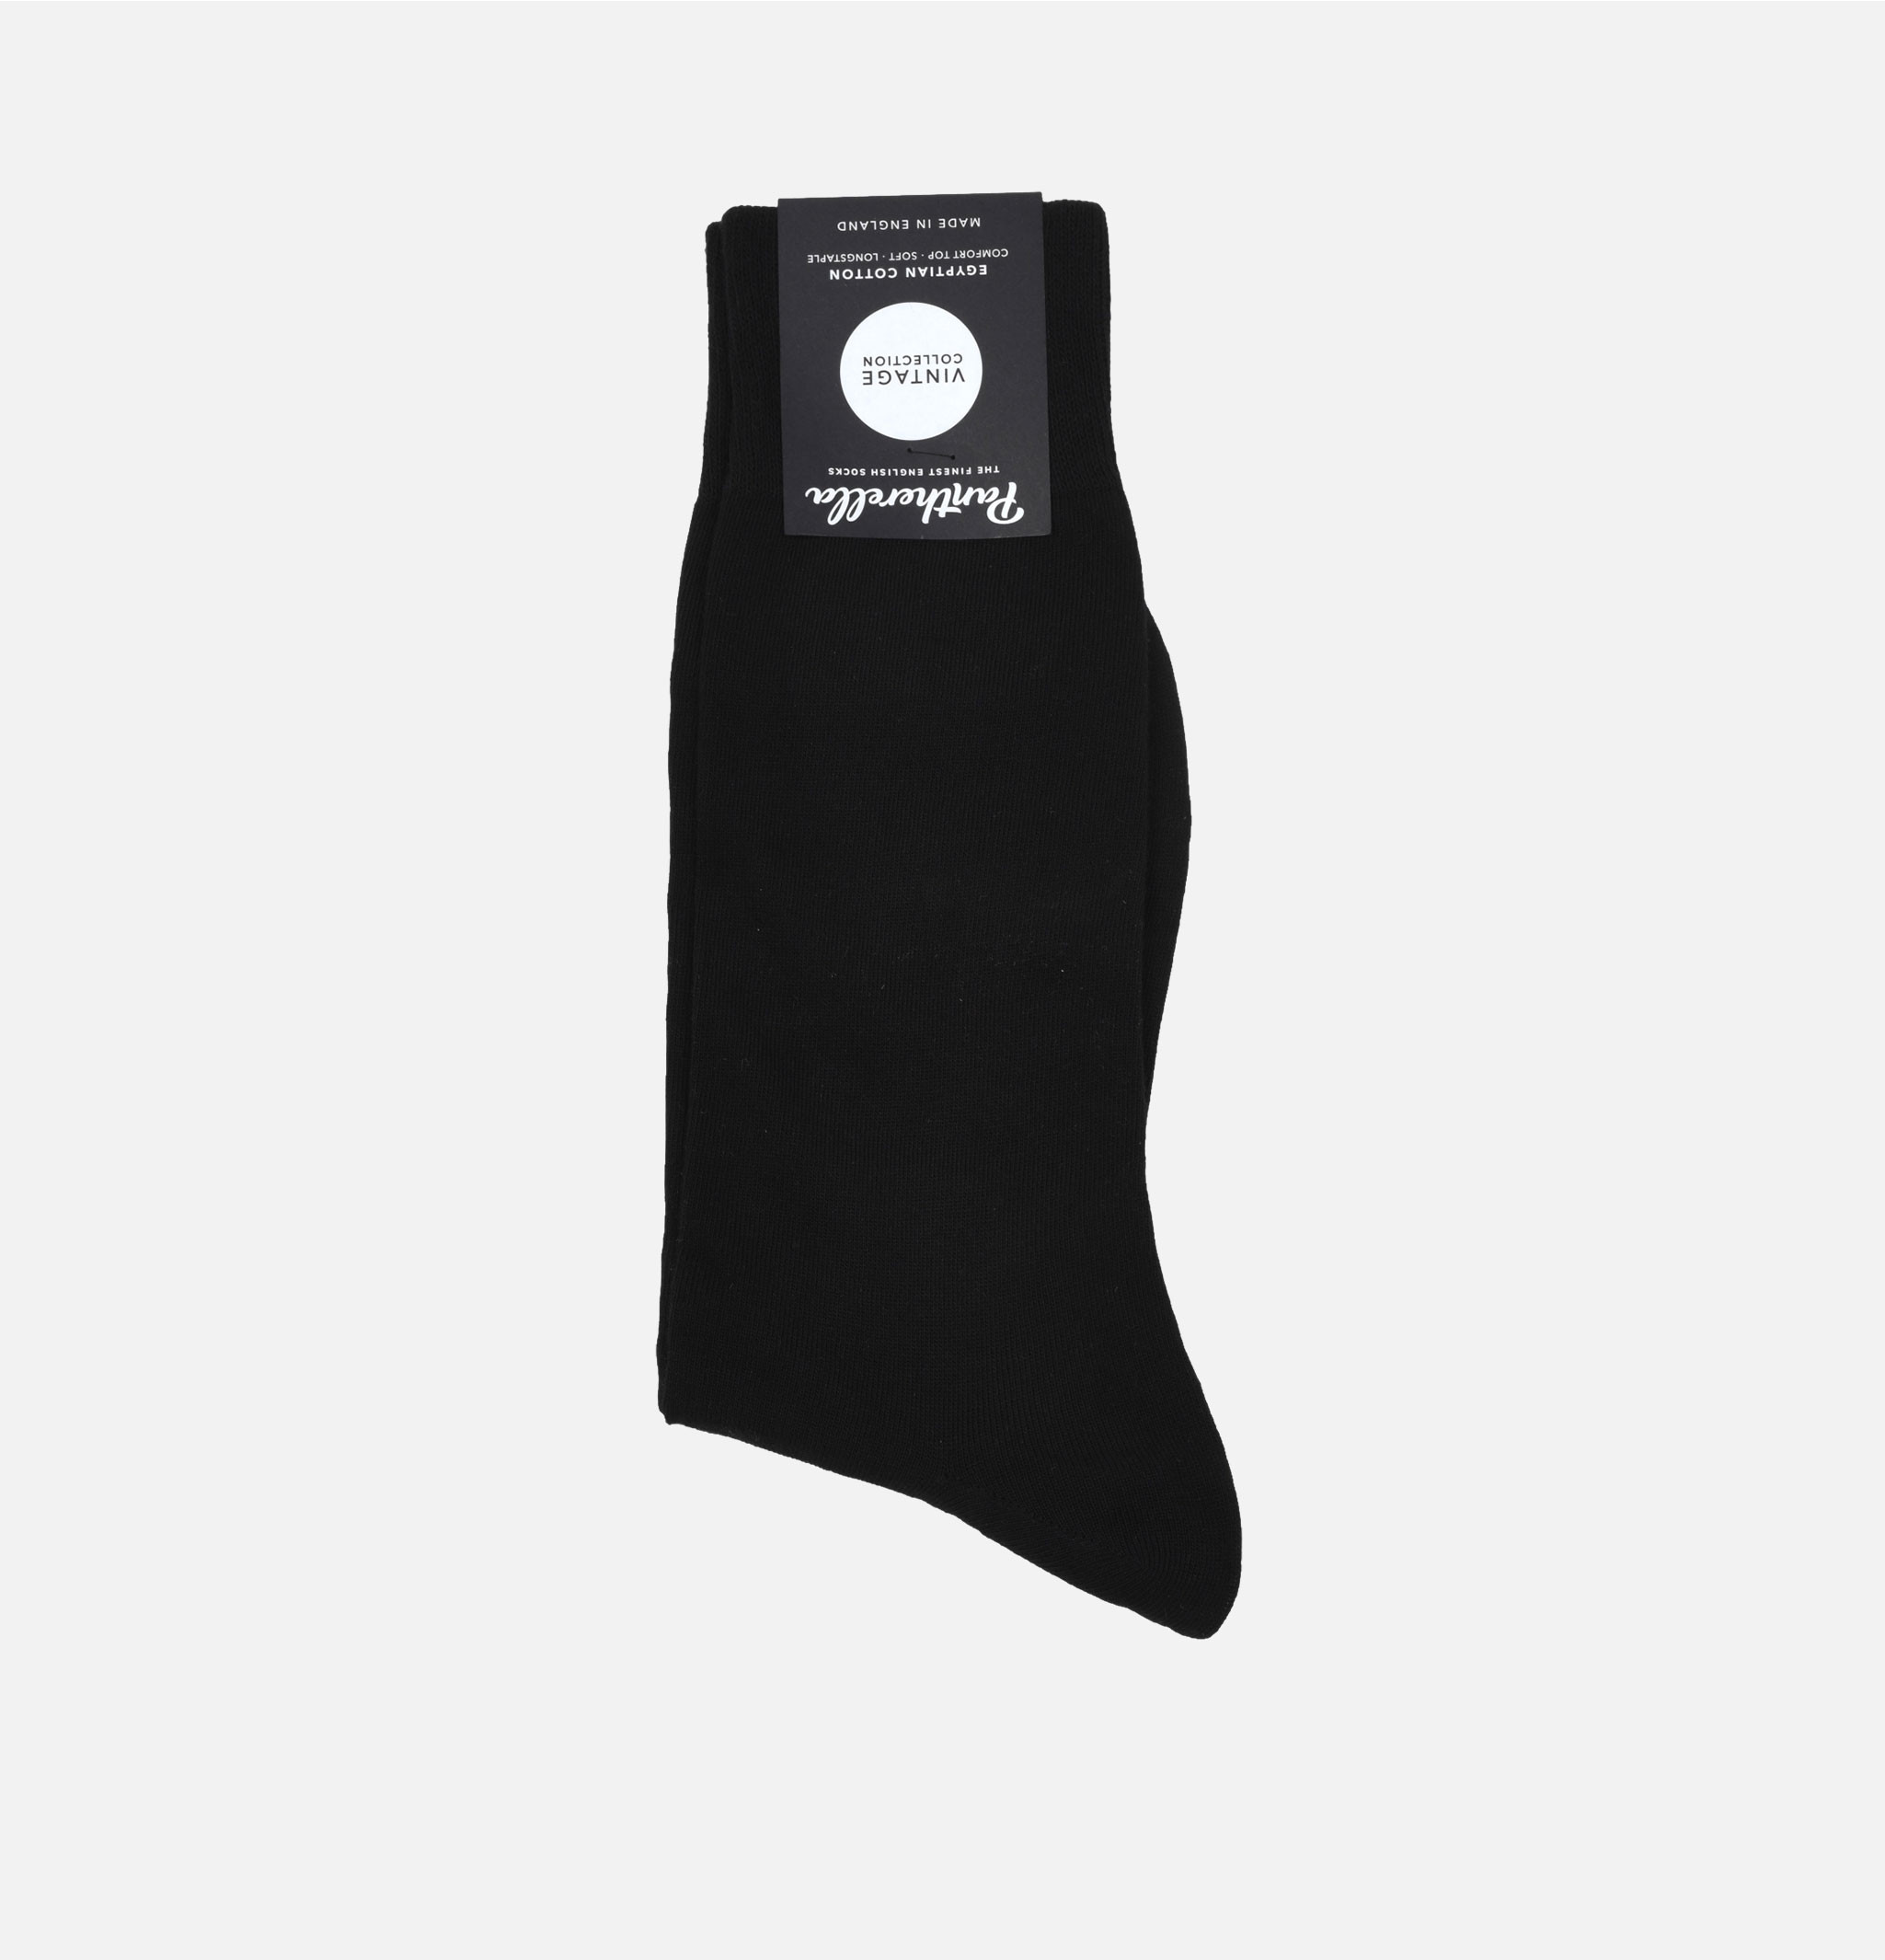 Pantherella Tavener Black socks